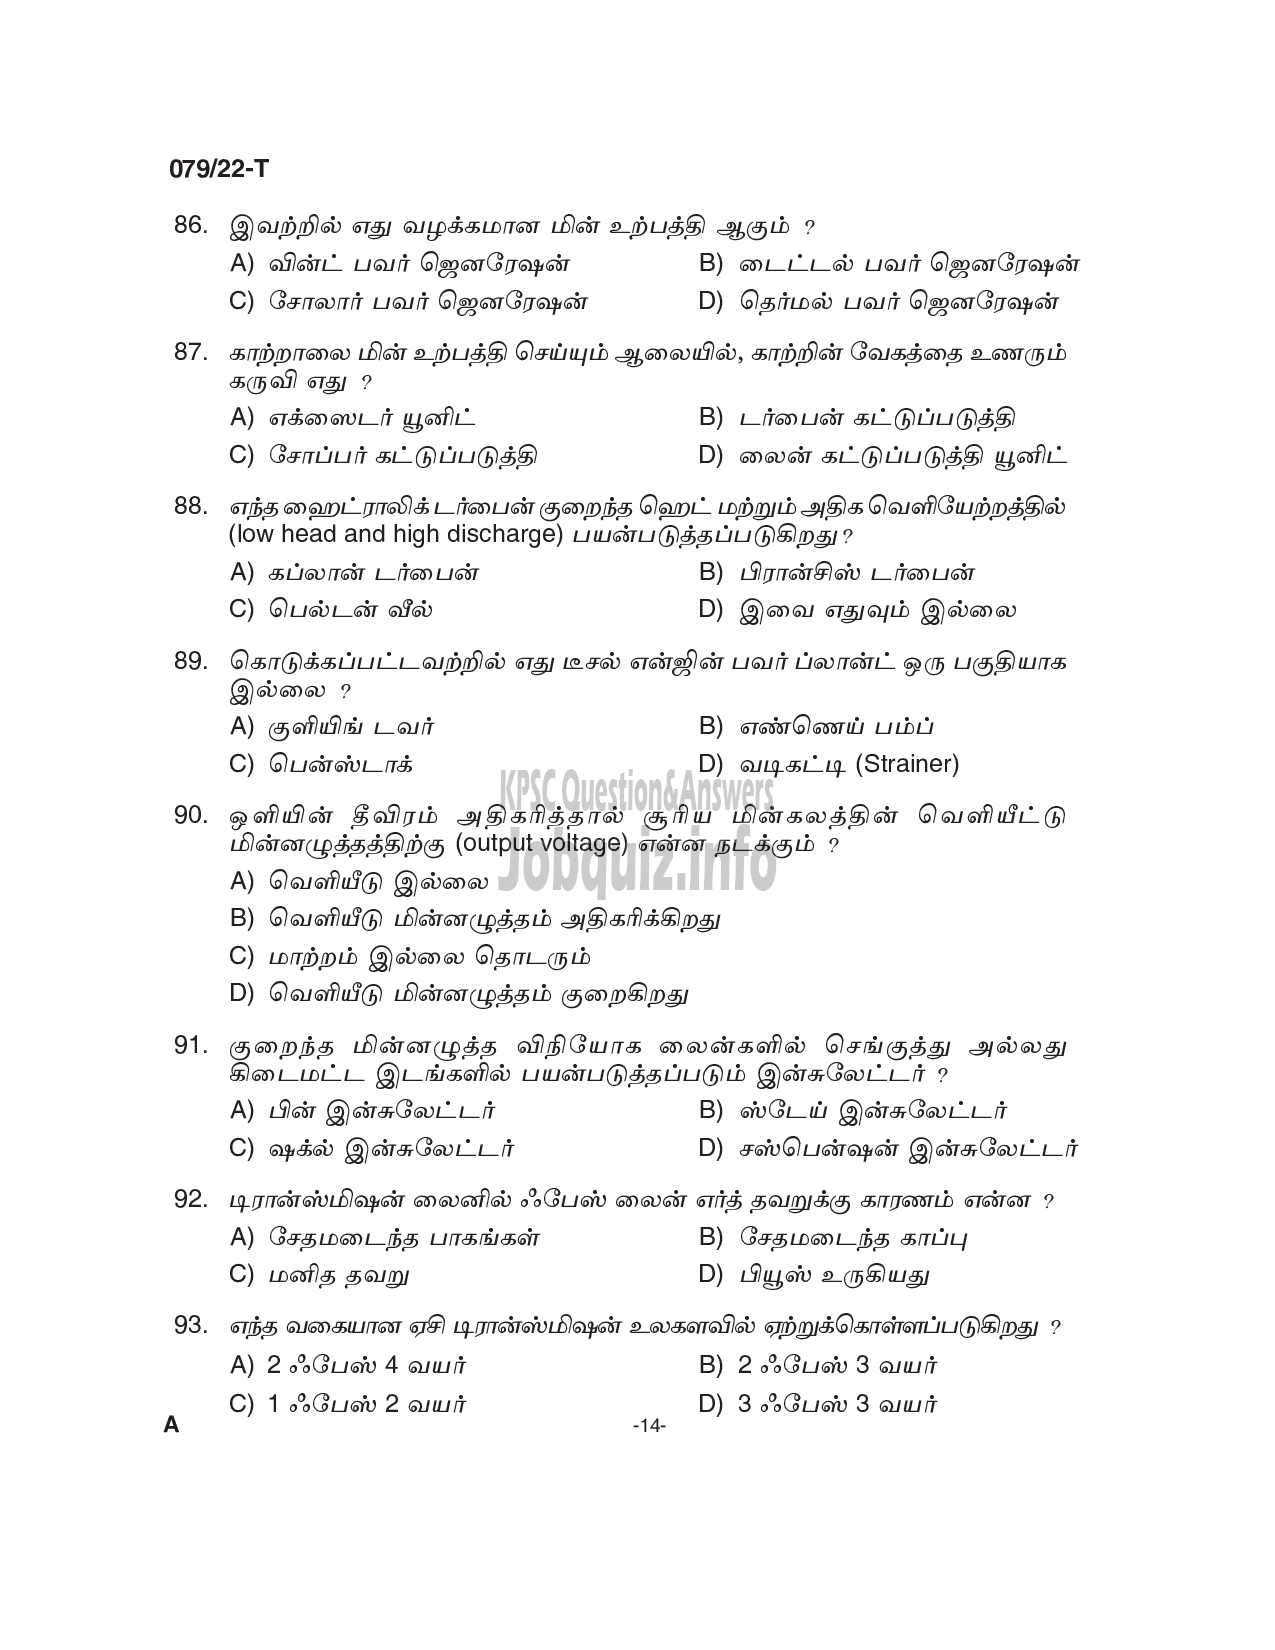 Kerala PSC Question Paper -  Electrician - Animal Husbandry  -14